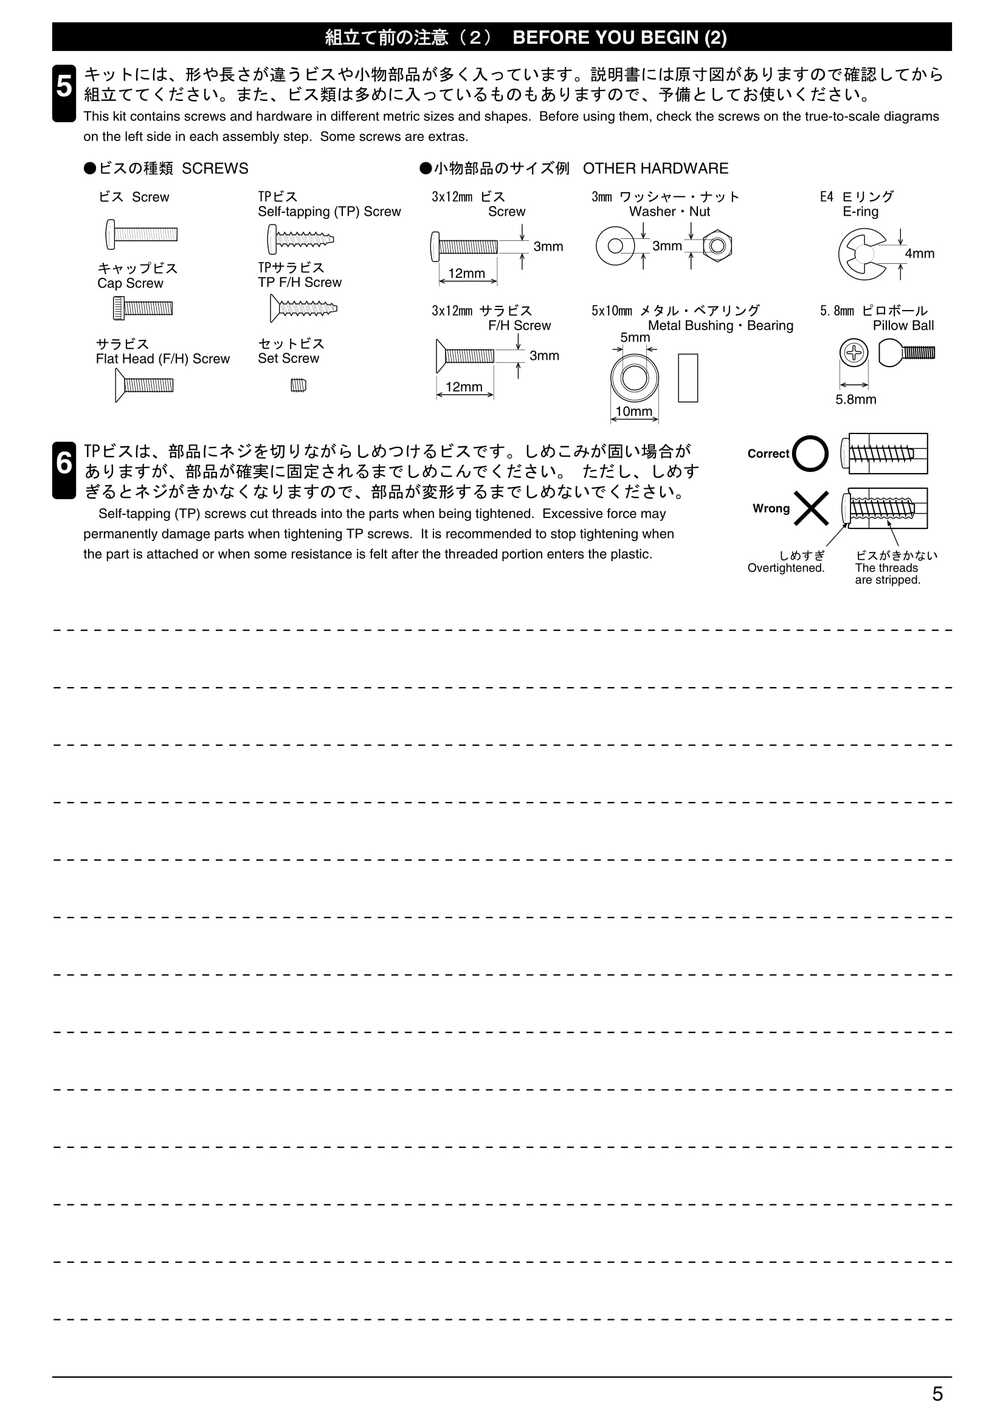 Kyosho - 31041 - Fantom Sports - Manual - Page 05